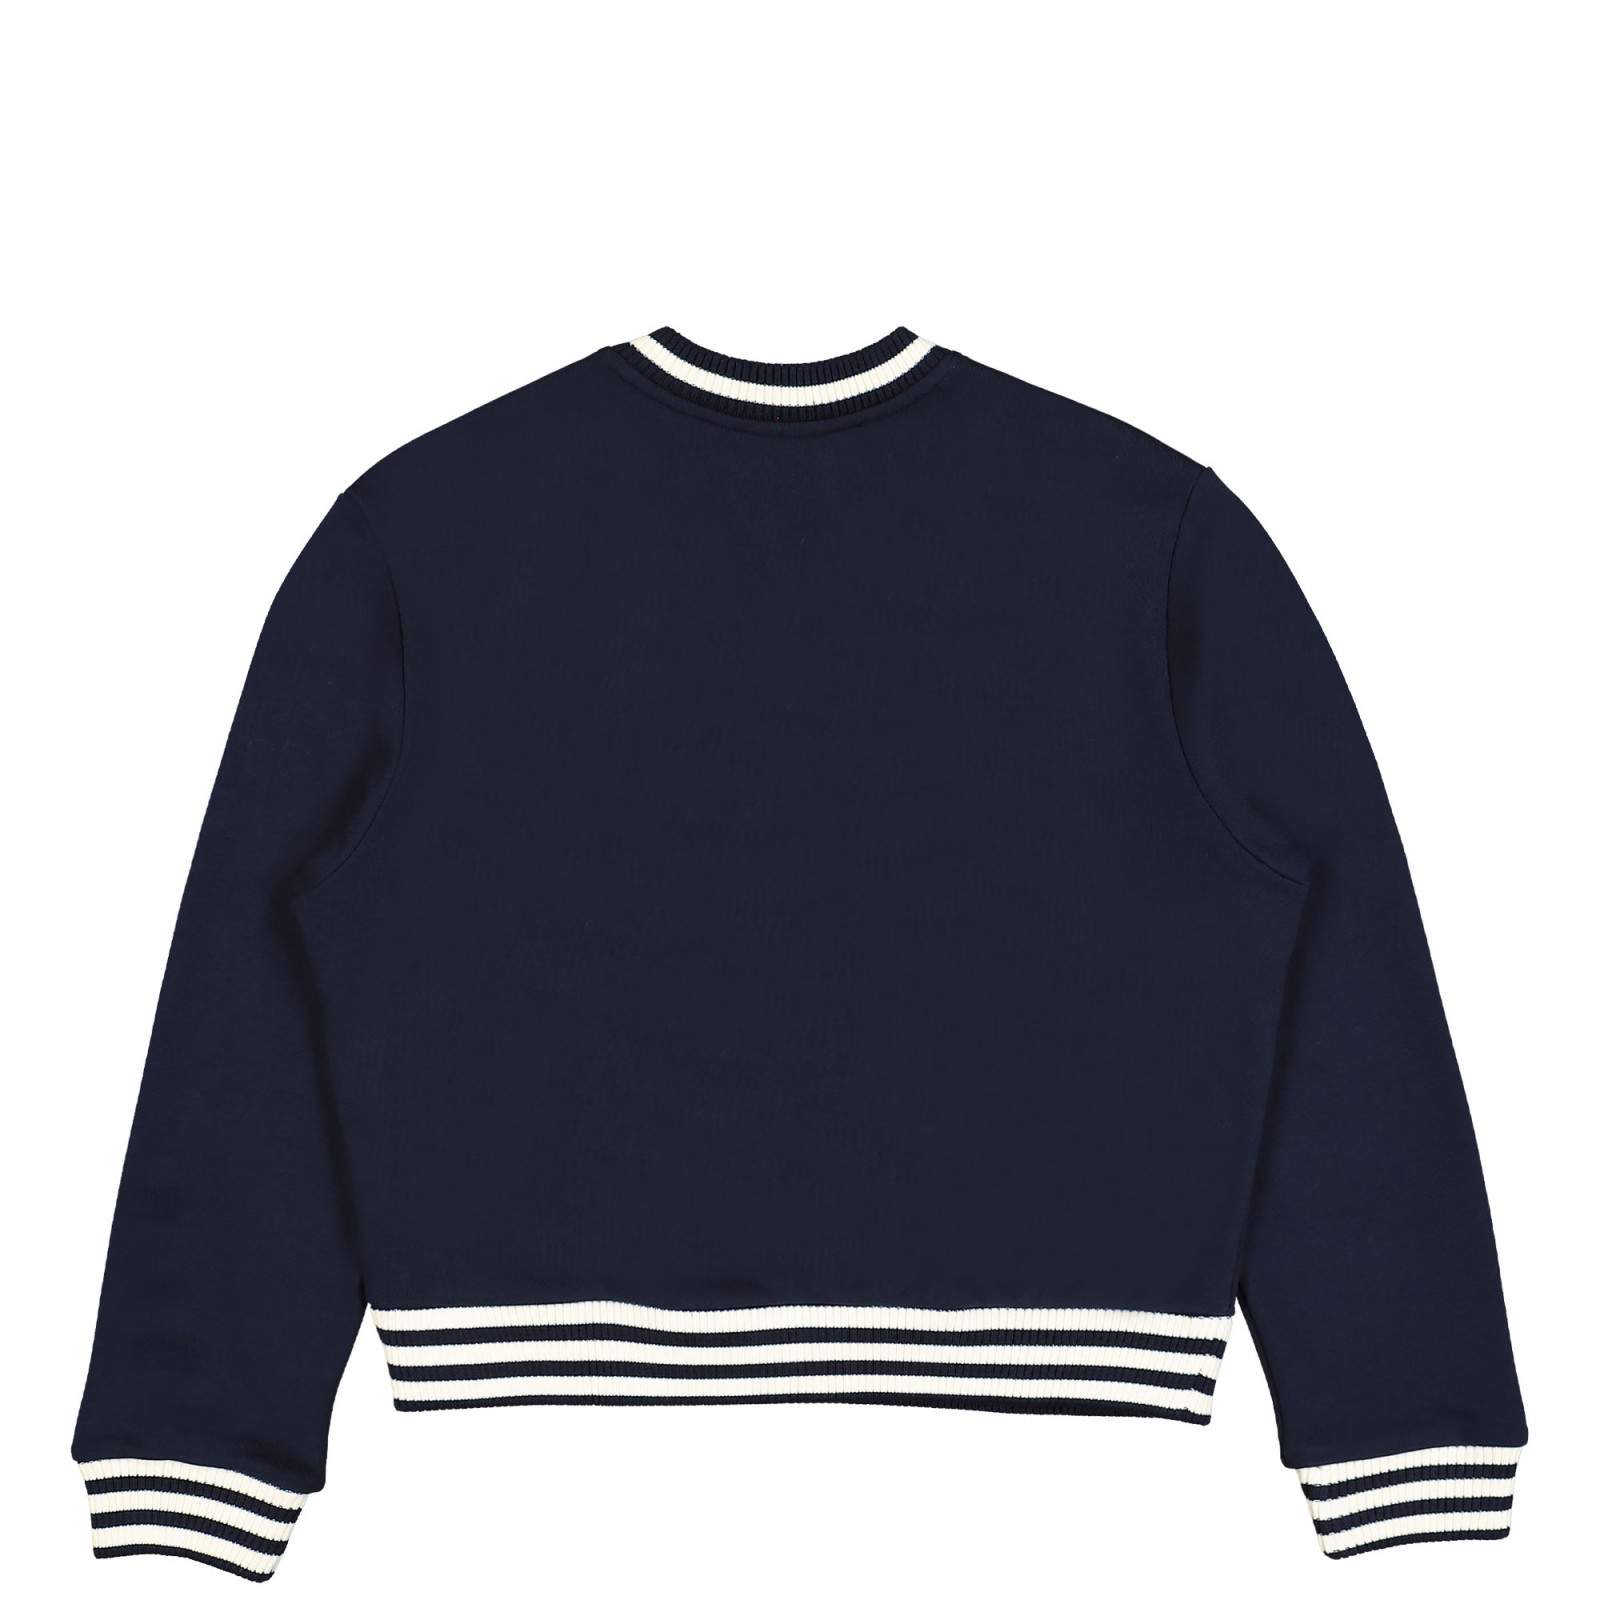 SPORTY & RICH x Adidas
Neck Crew Sweater
Legend Ink